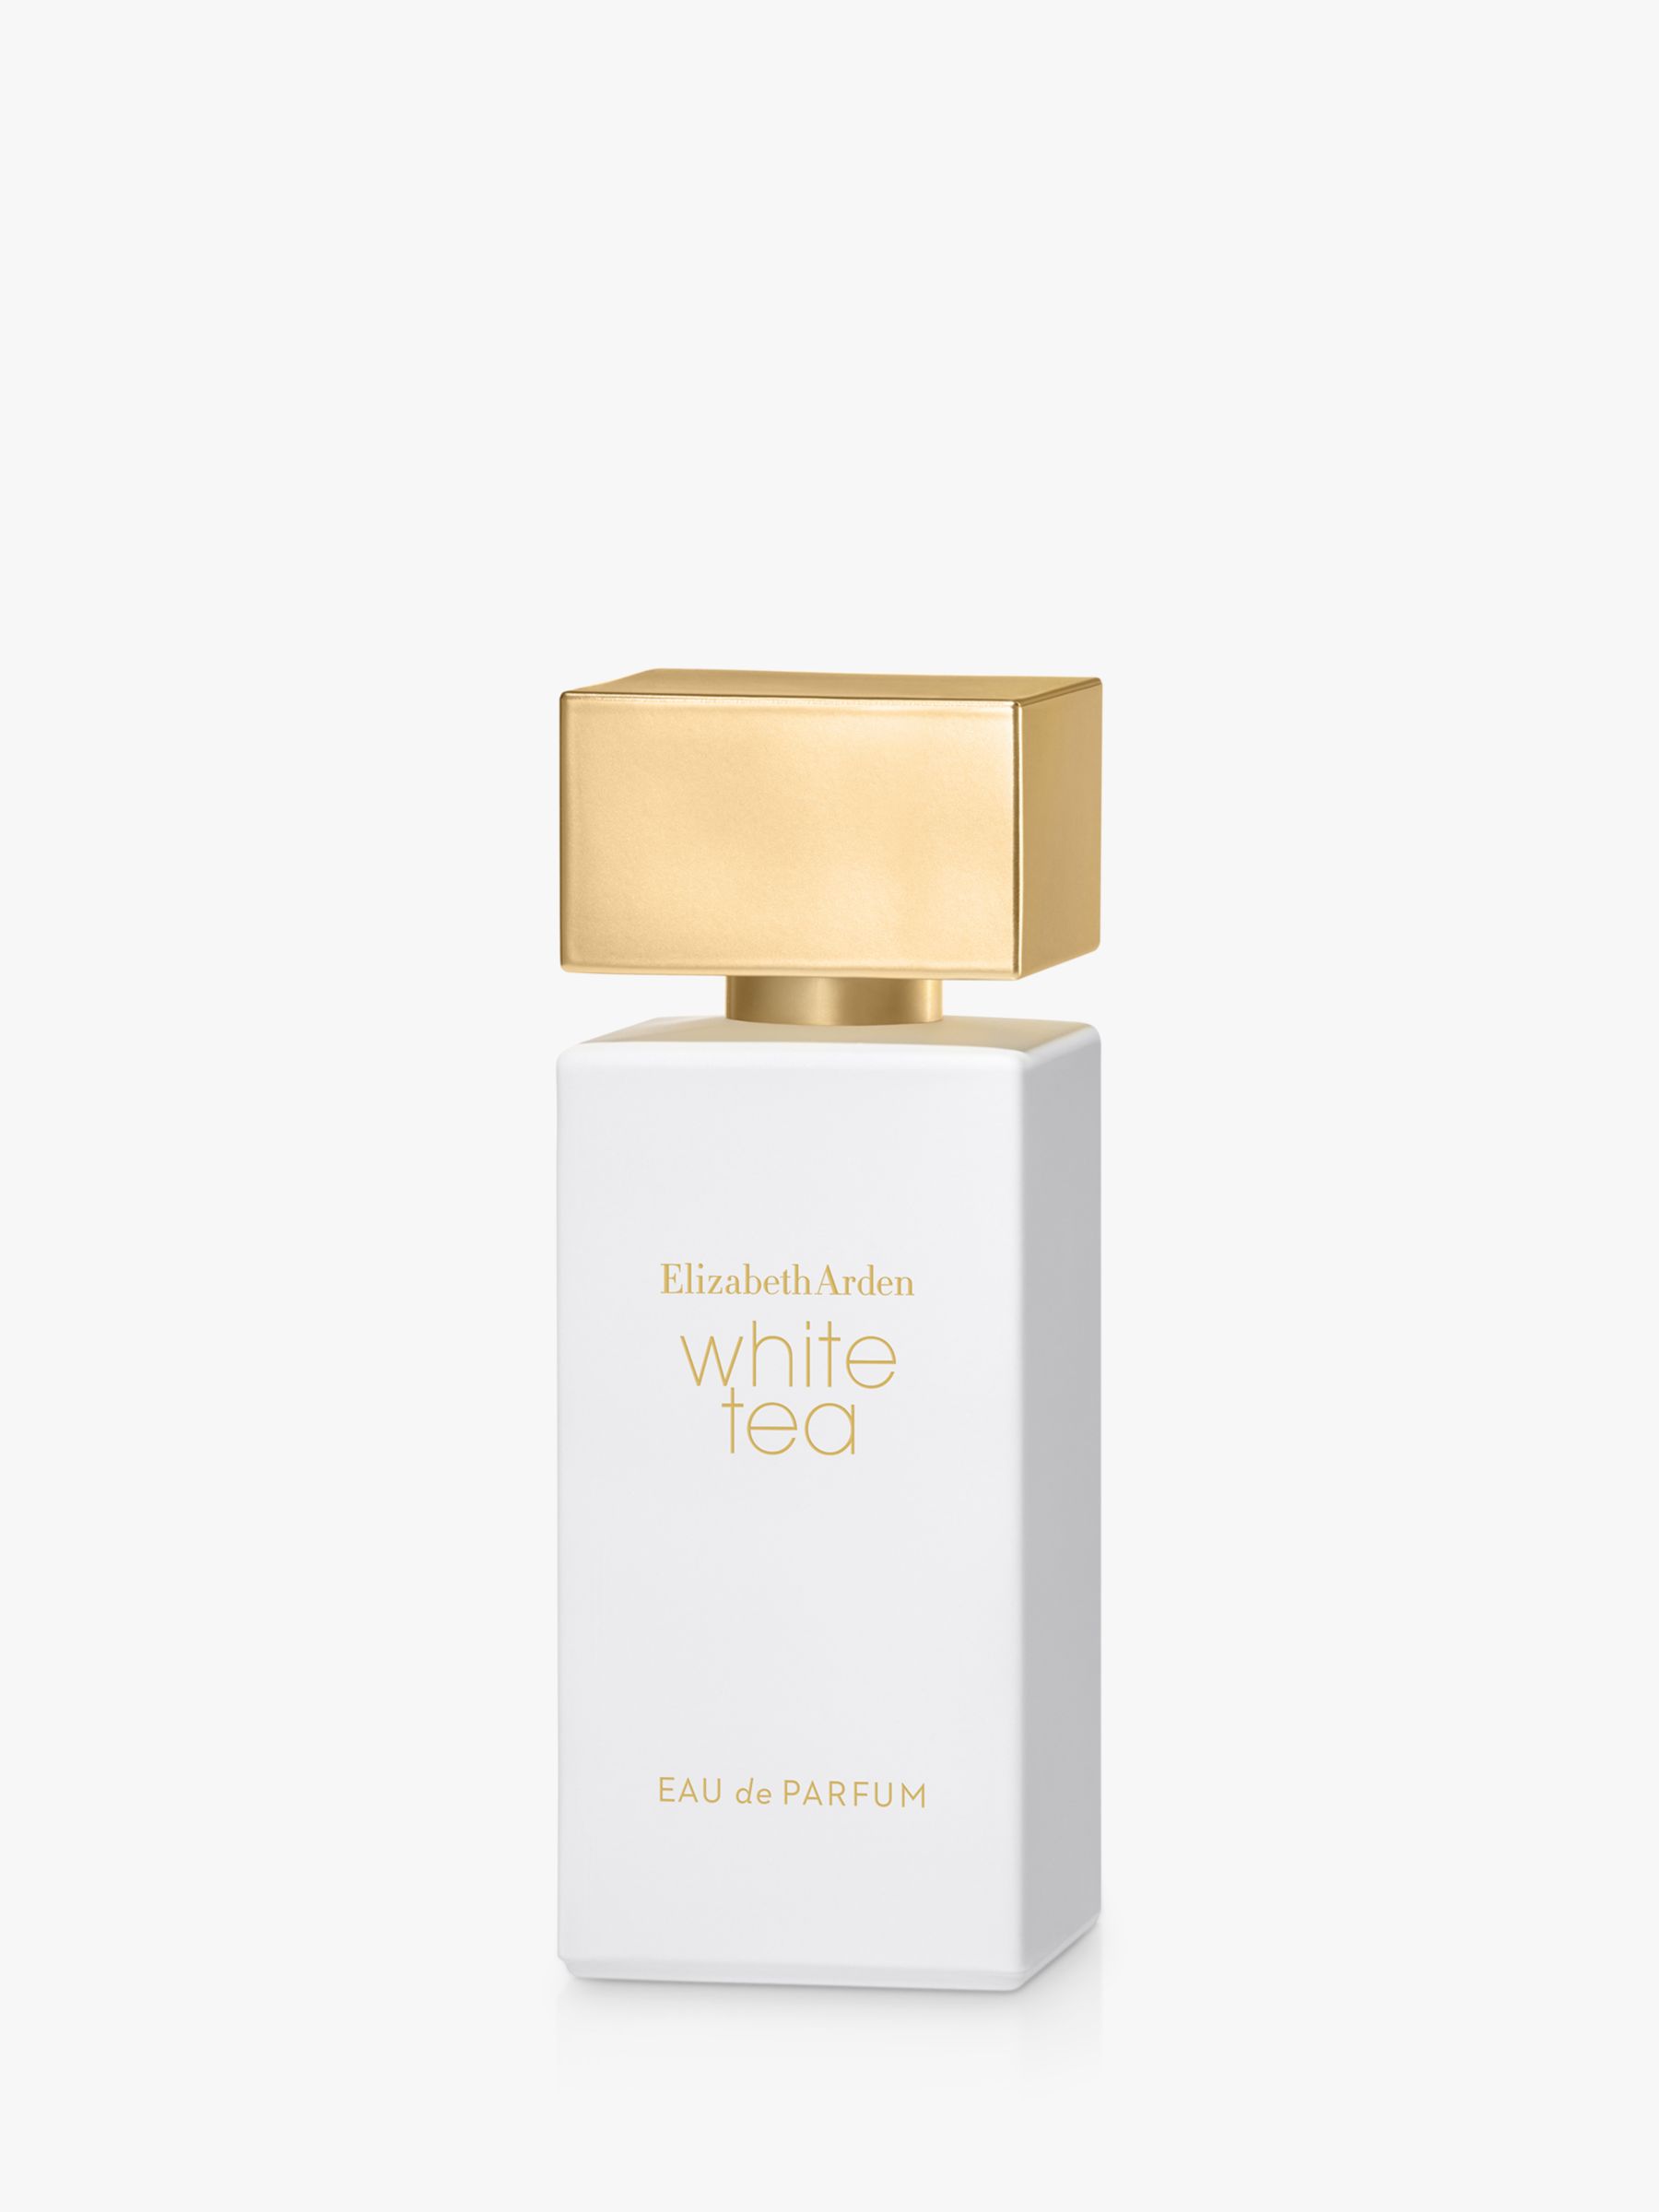 Elizabeth Arden White Tea Eau de Parfum, 50ml 2